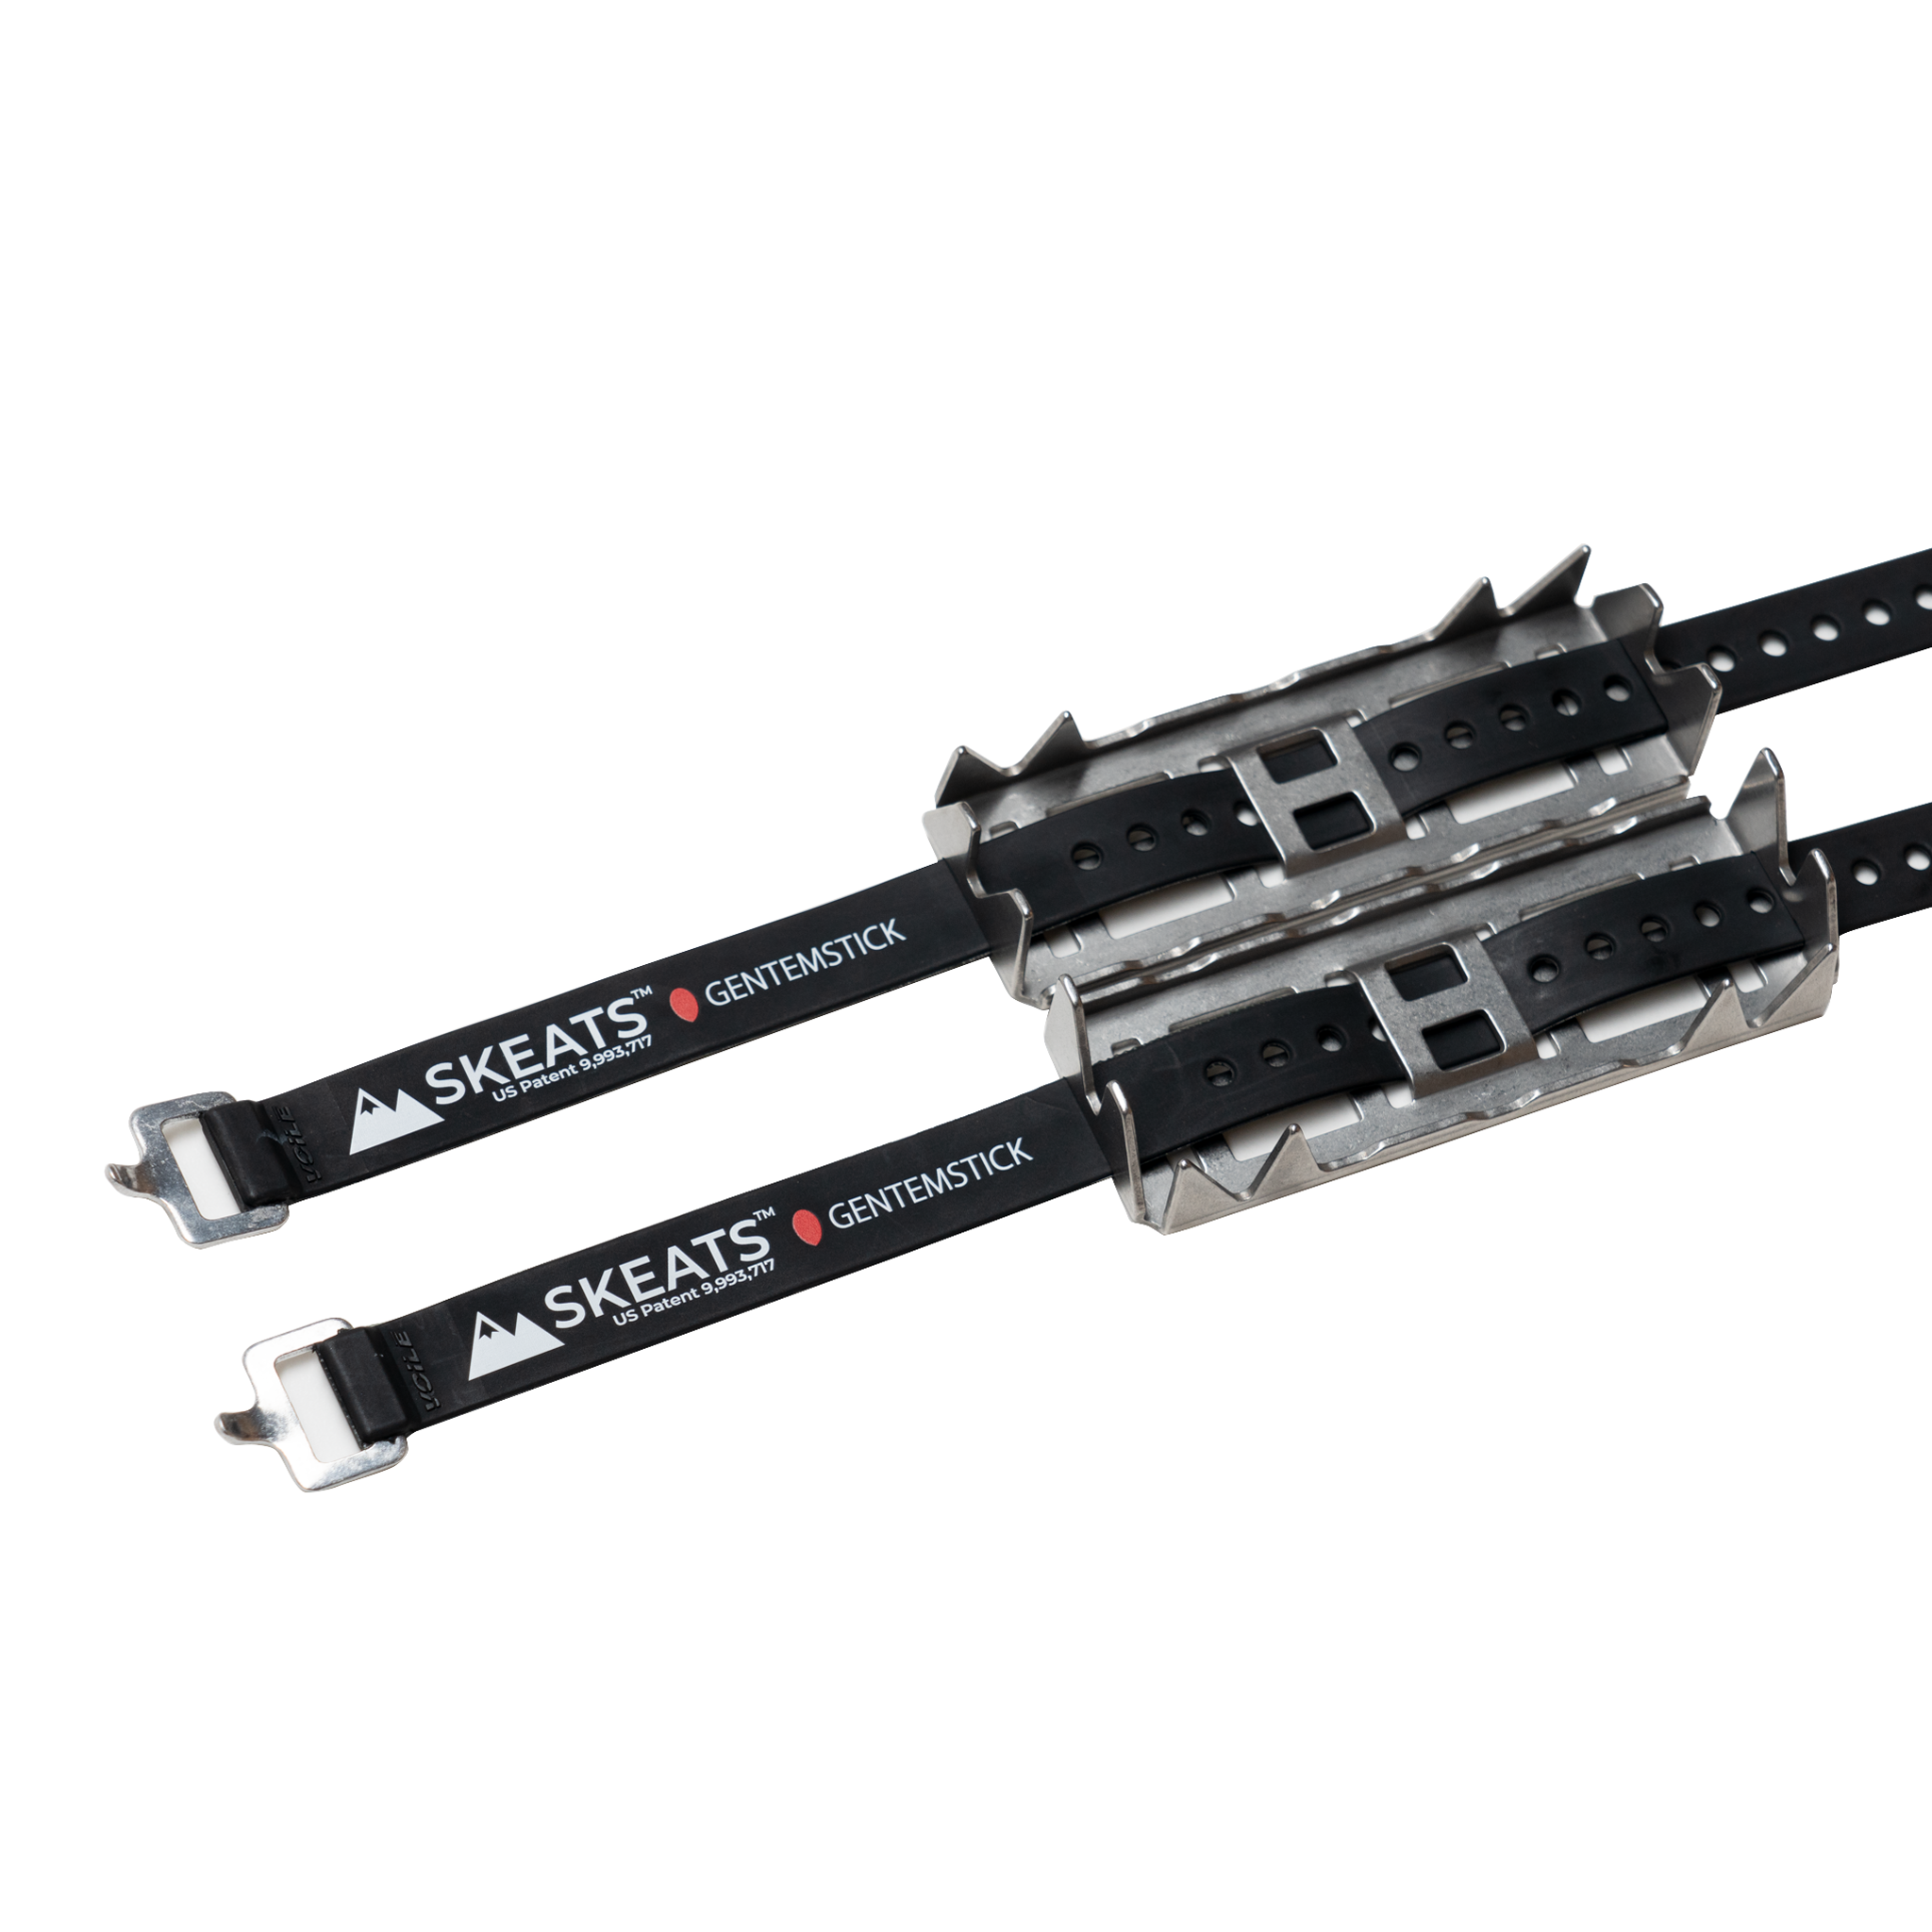 SKEATS™ X GENTEMSTICK CLAWS 130mm 販売開始！